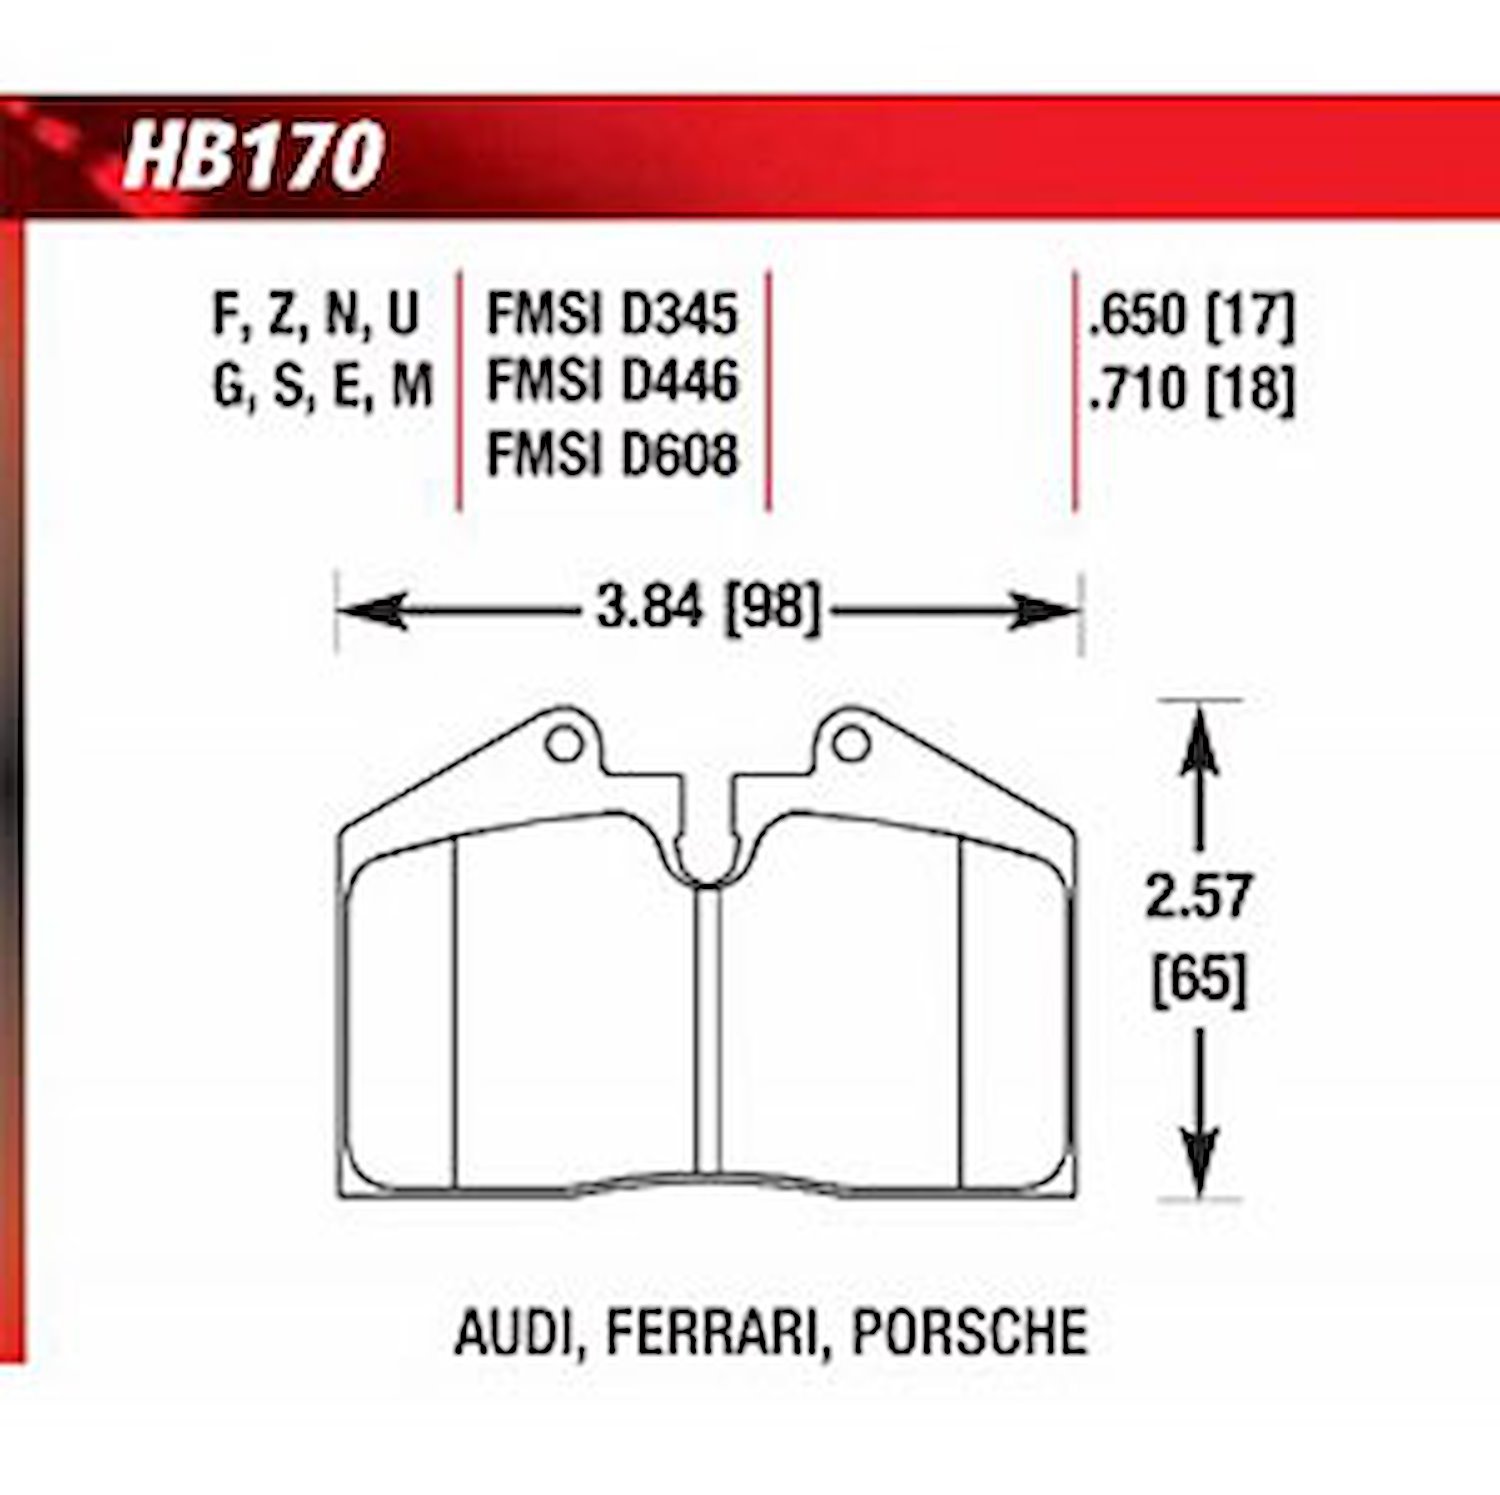 Blue 9012 Disk Brake Pads Audi, Ferrari 348, Porsche